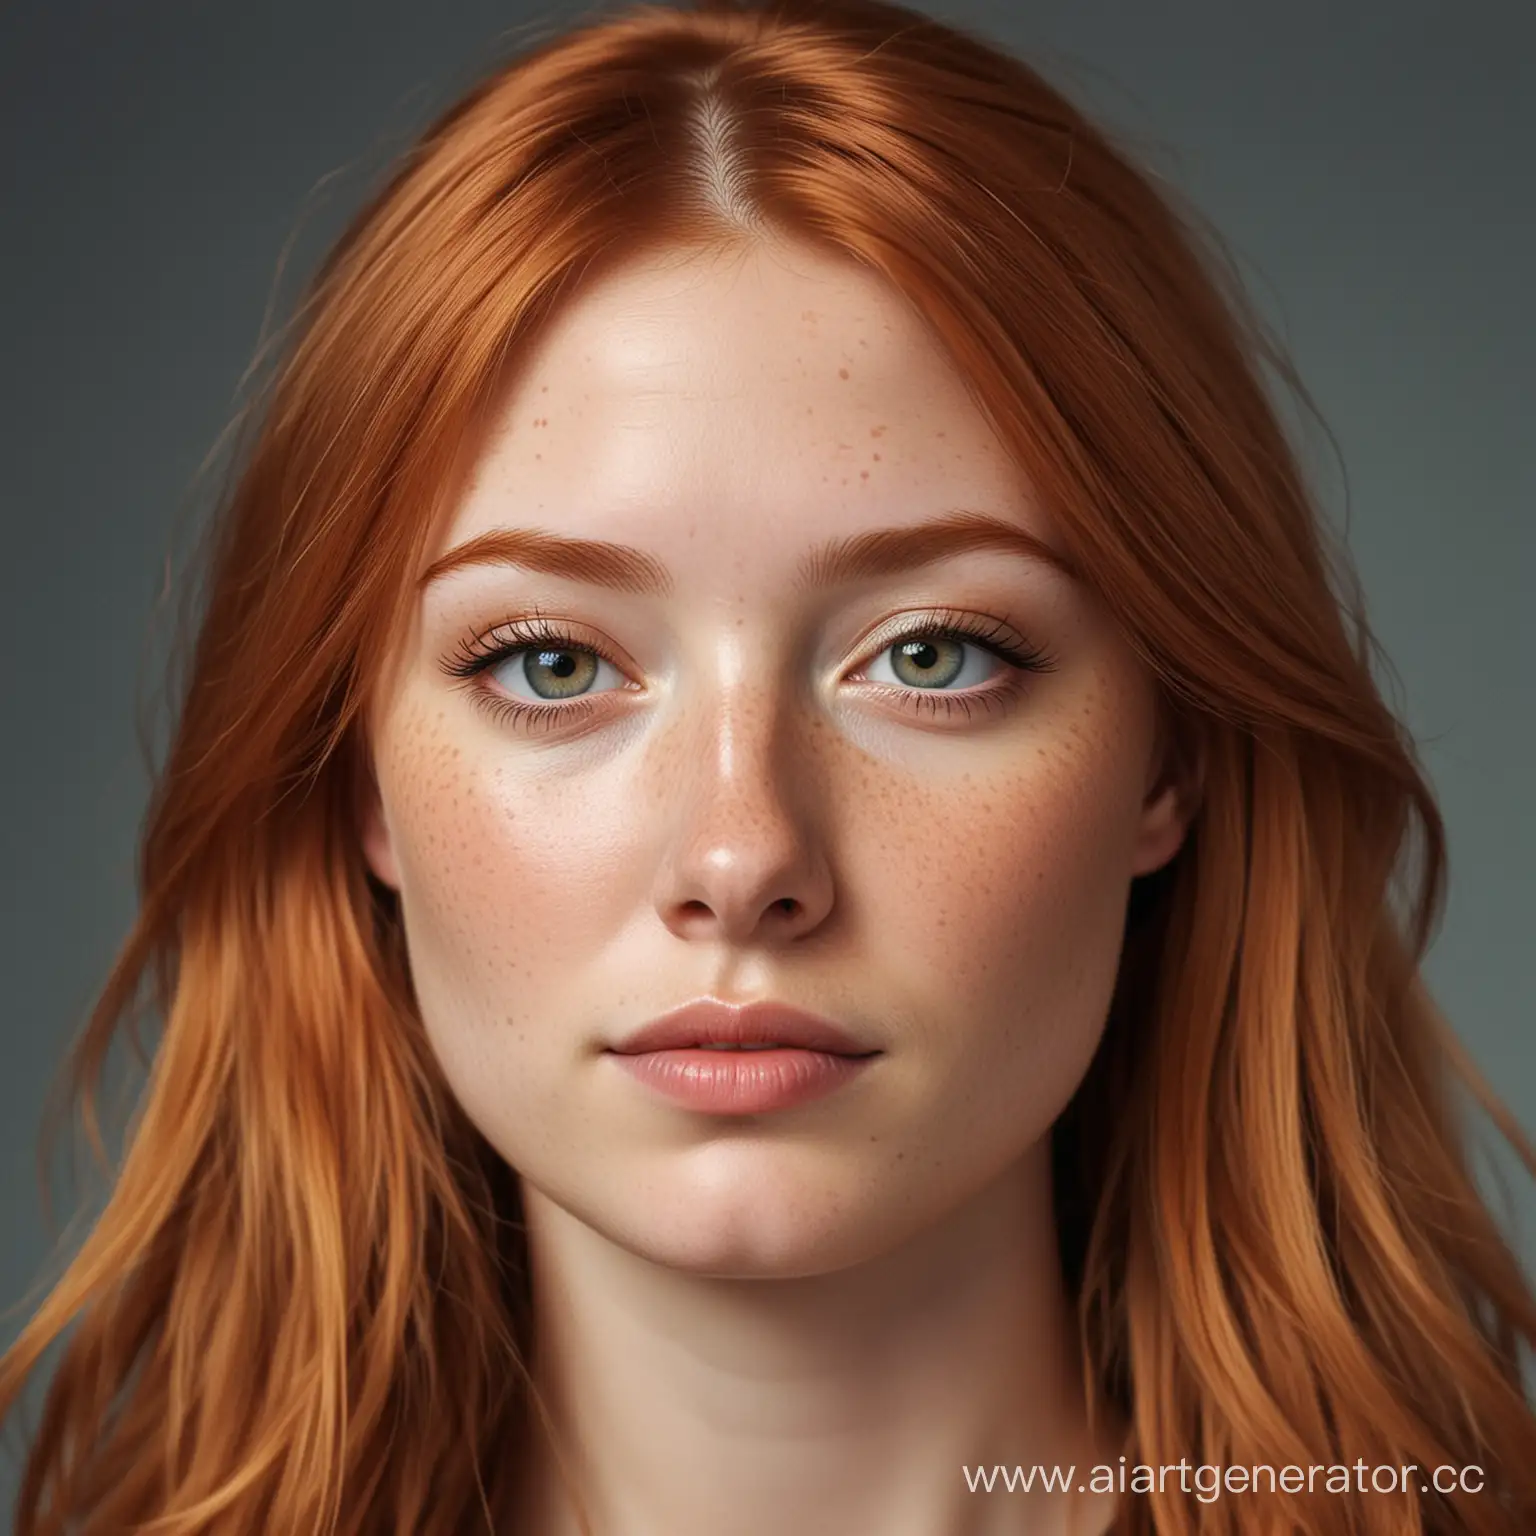 Scandinavian-Frontend-Developer-Avatar-with-MediumLength-ReddishBlond-Hair